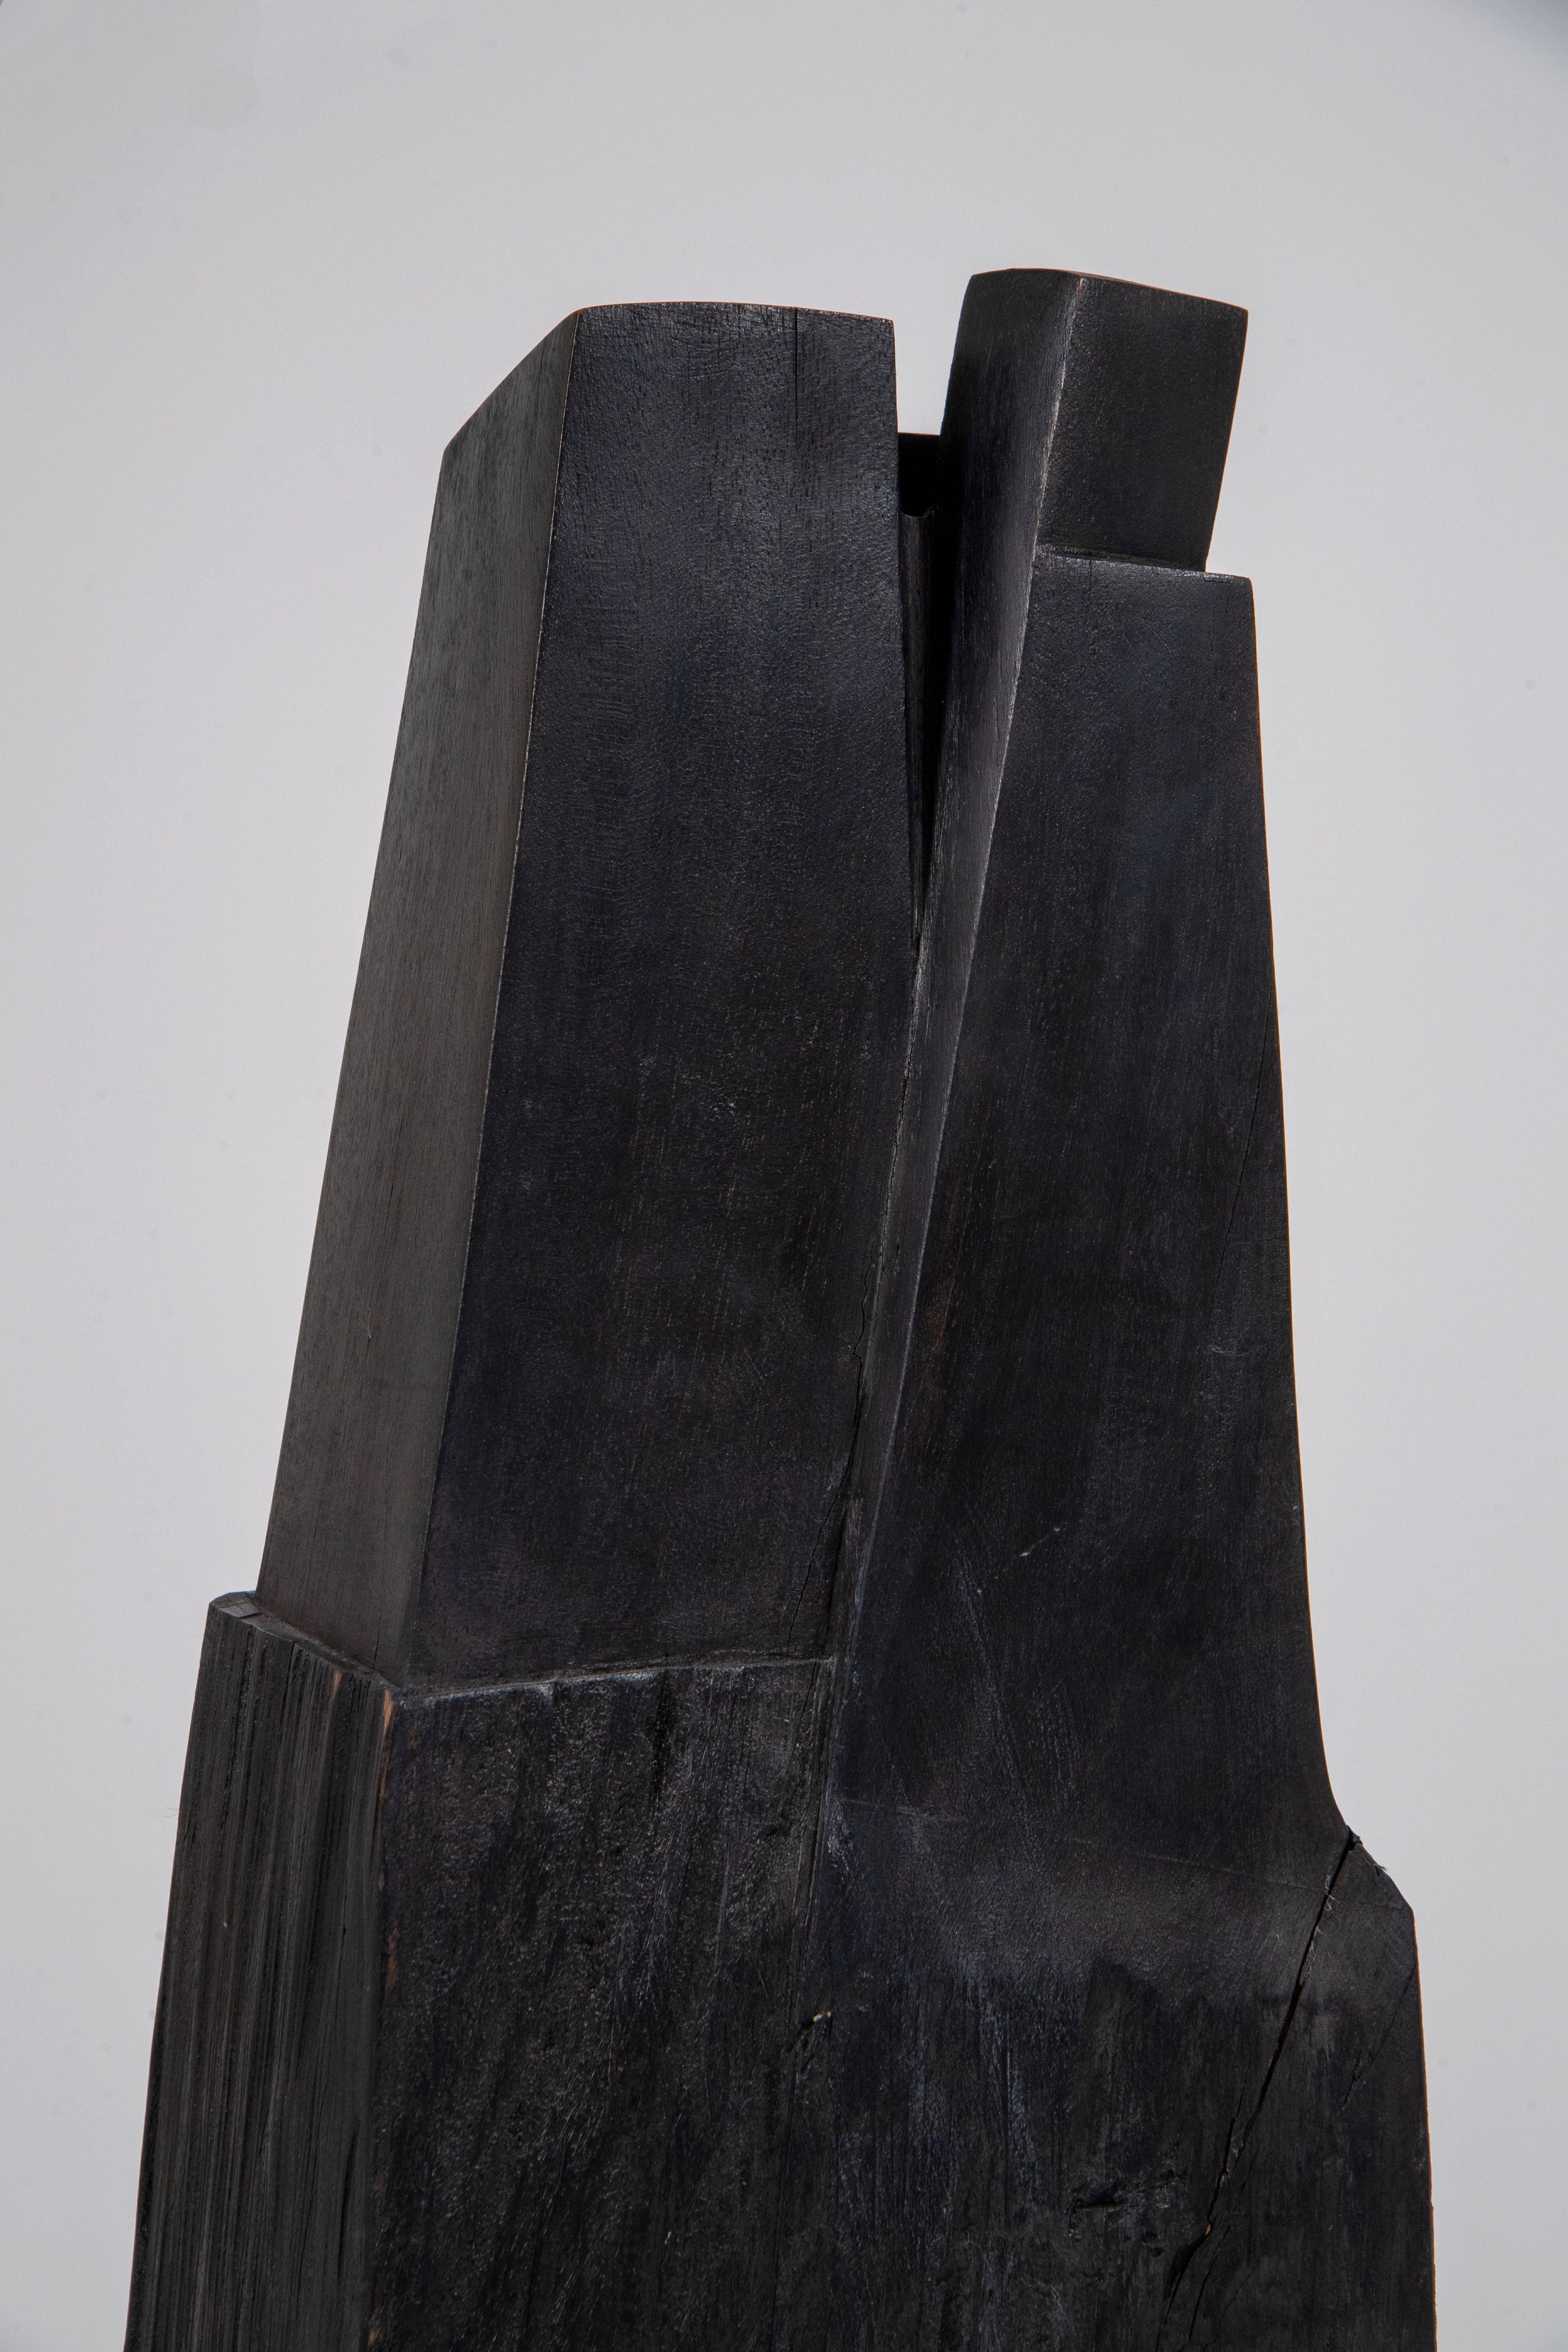 20th Century Black Wooden Sculptures 